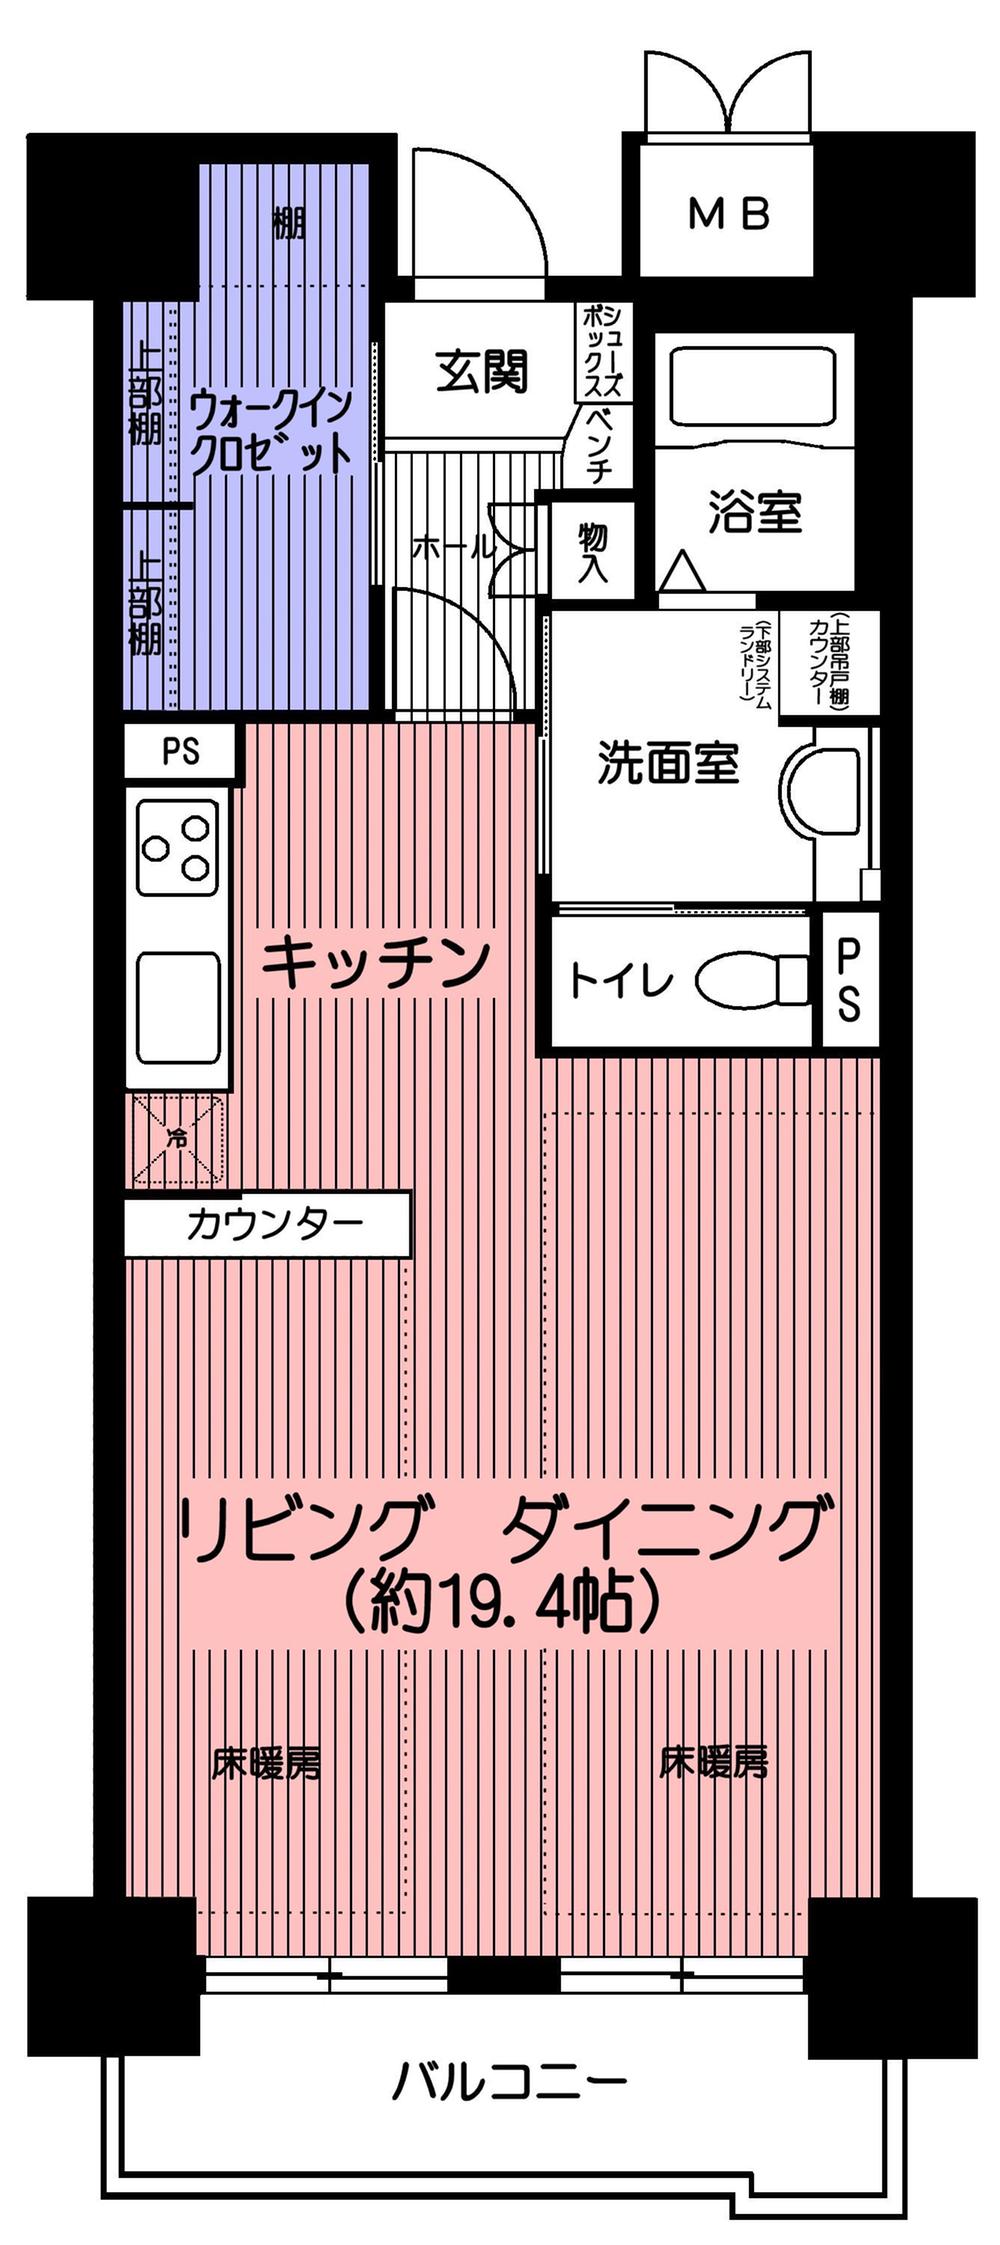 Floor plan. Price 13.5 million yen, Occupied area 64.72 sq m , Balcony area 8.04 sq m